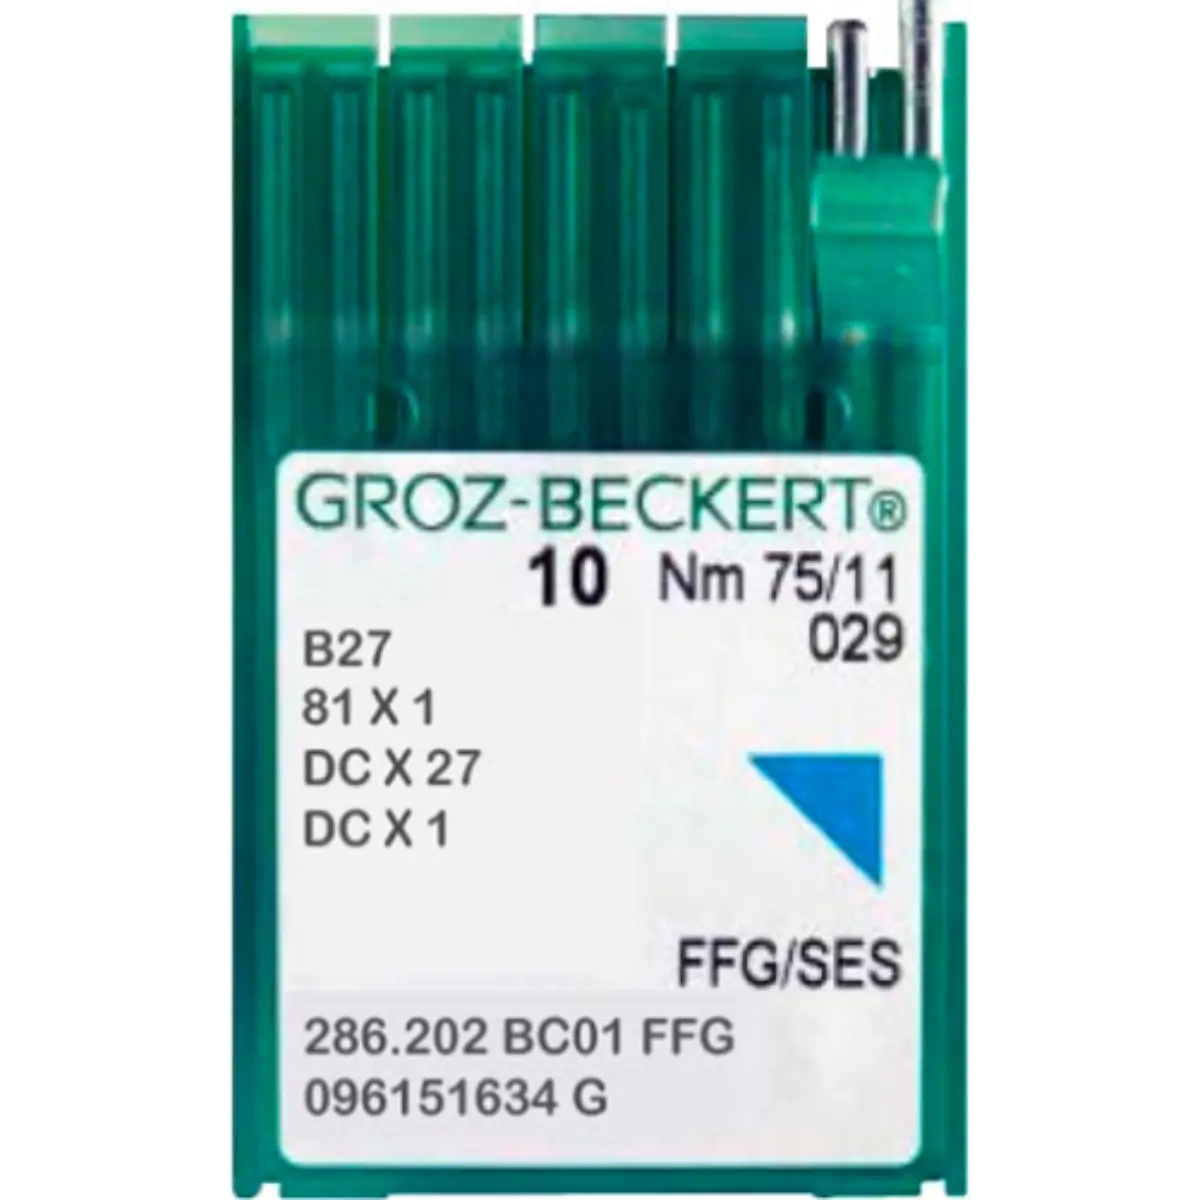 Industrial Overlock Needles B27, DCX1, DCX27, 81x1 Groz-Beckert